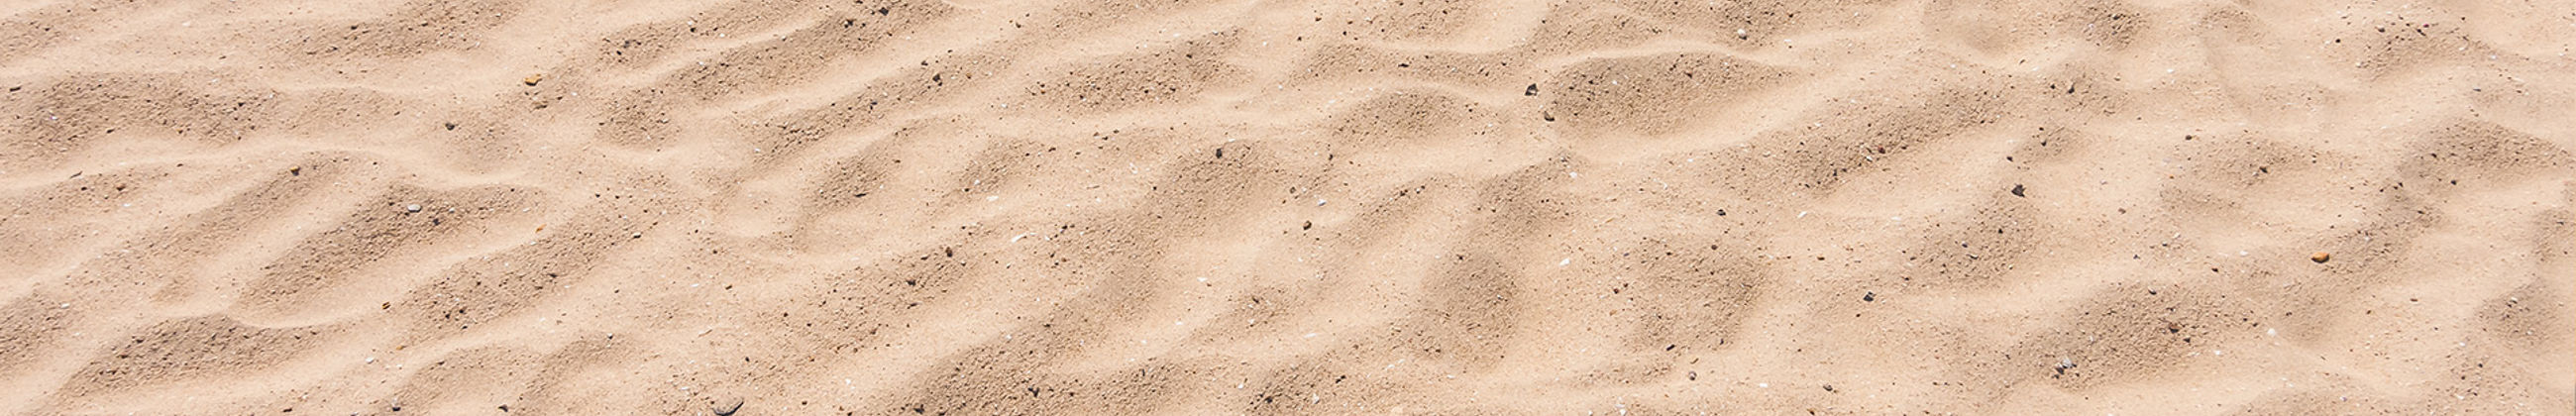 callantsoog vakantiehuis zand